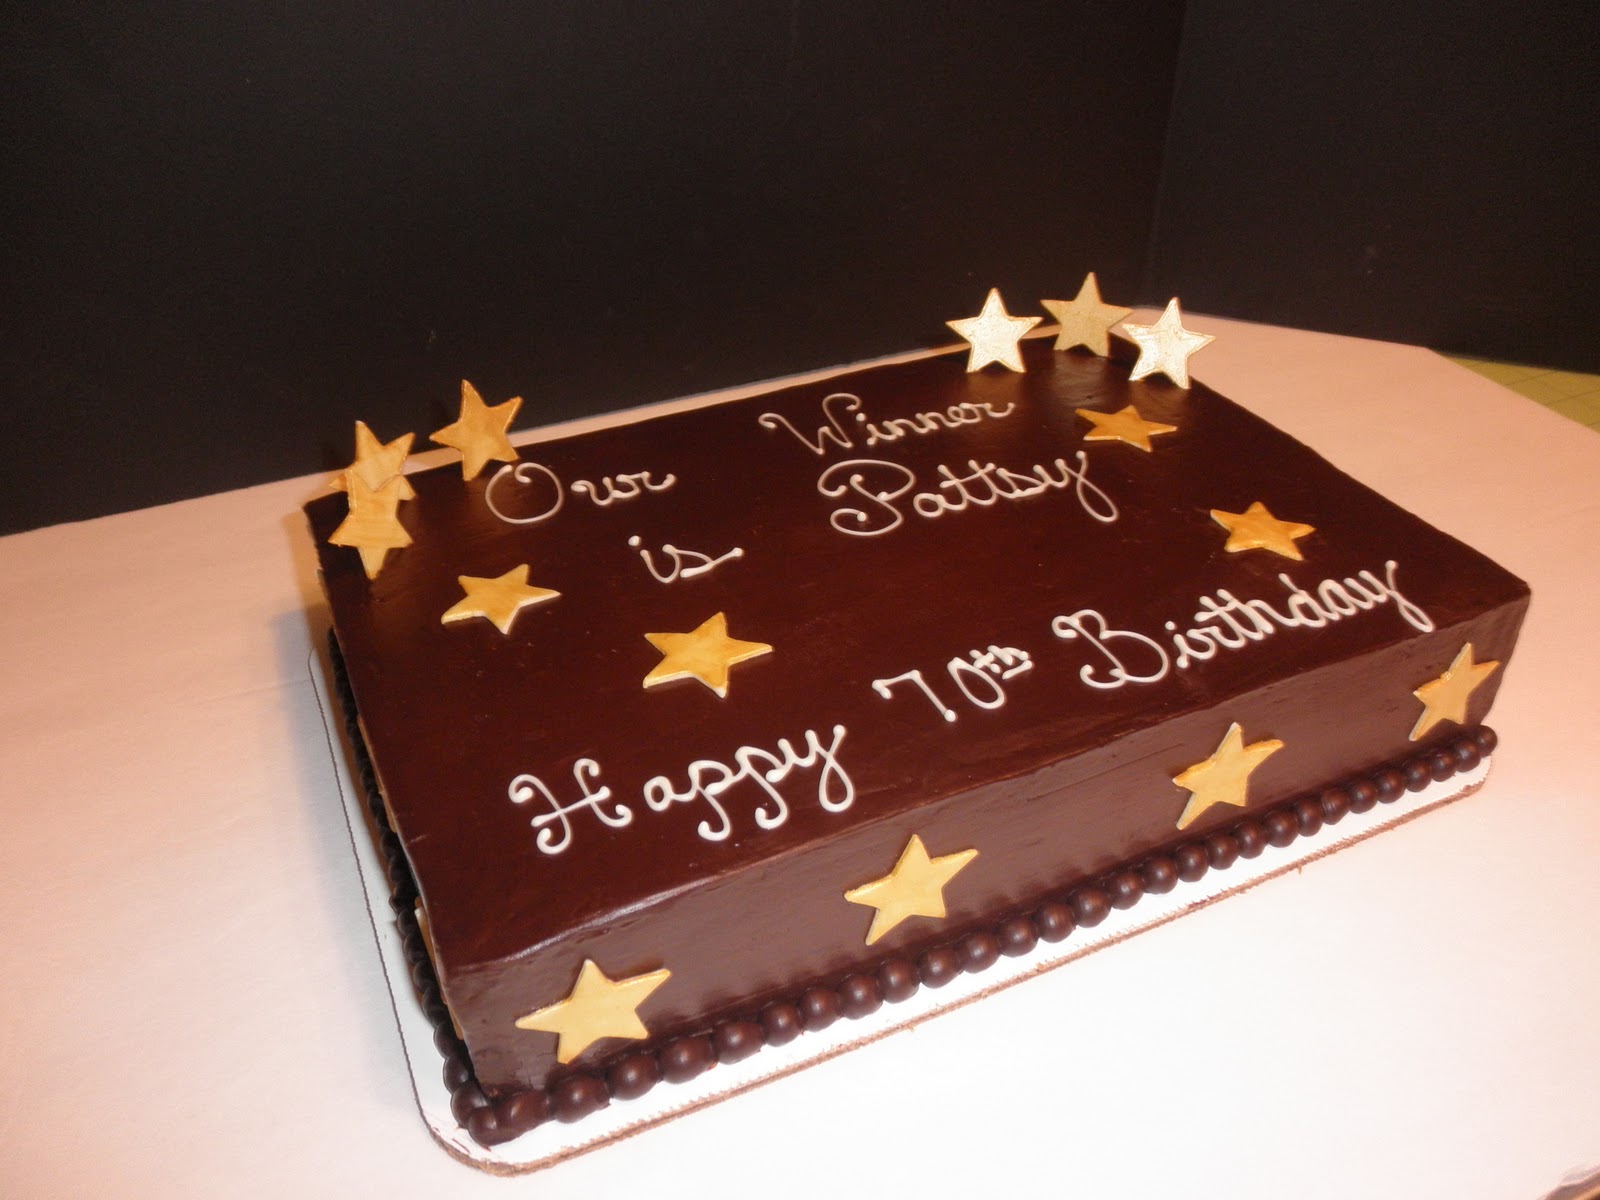 chocolate birthday cake images 70th Birthday Sheet cake. A personal winner cake with white chocolate 